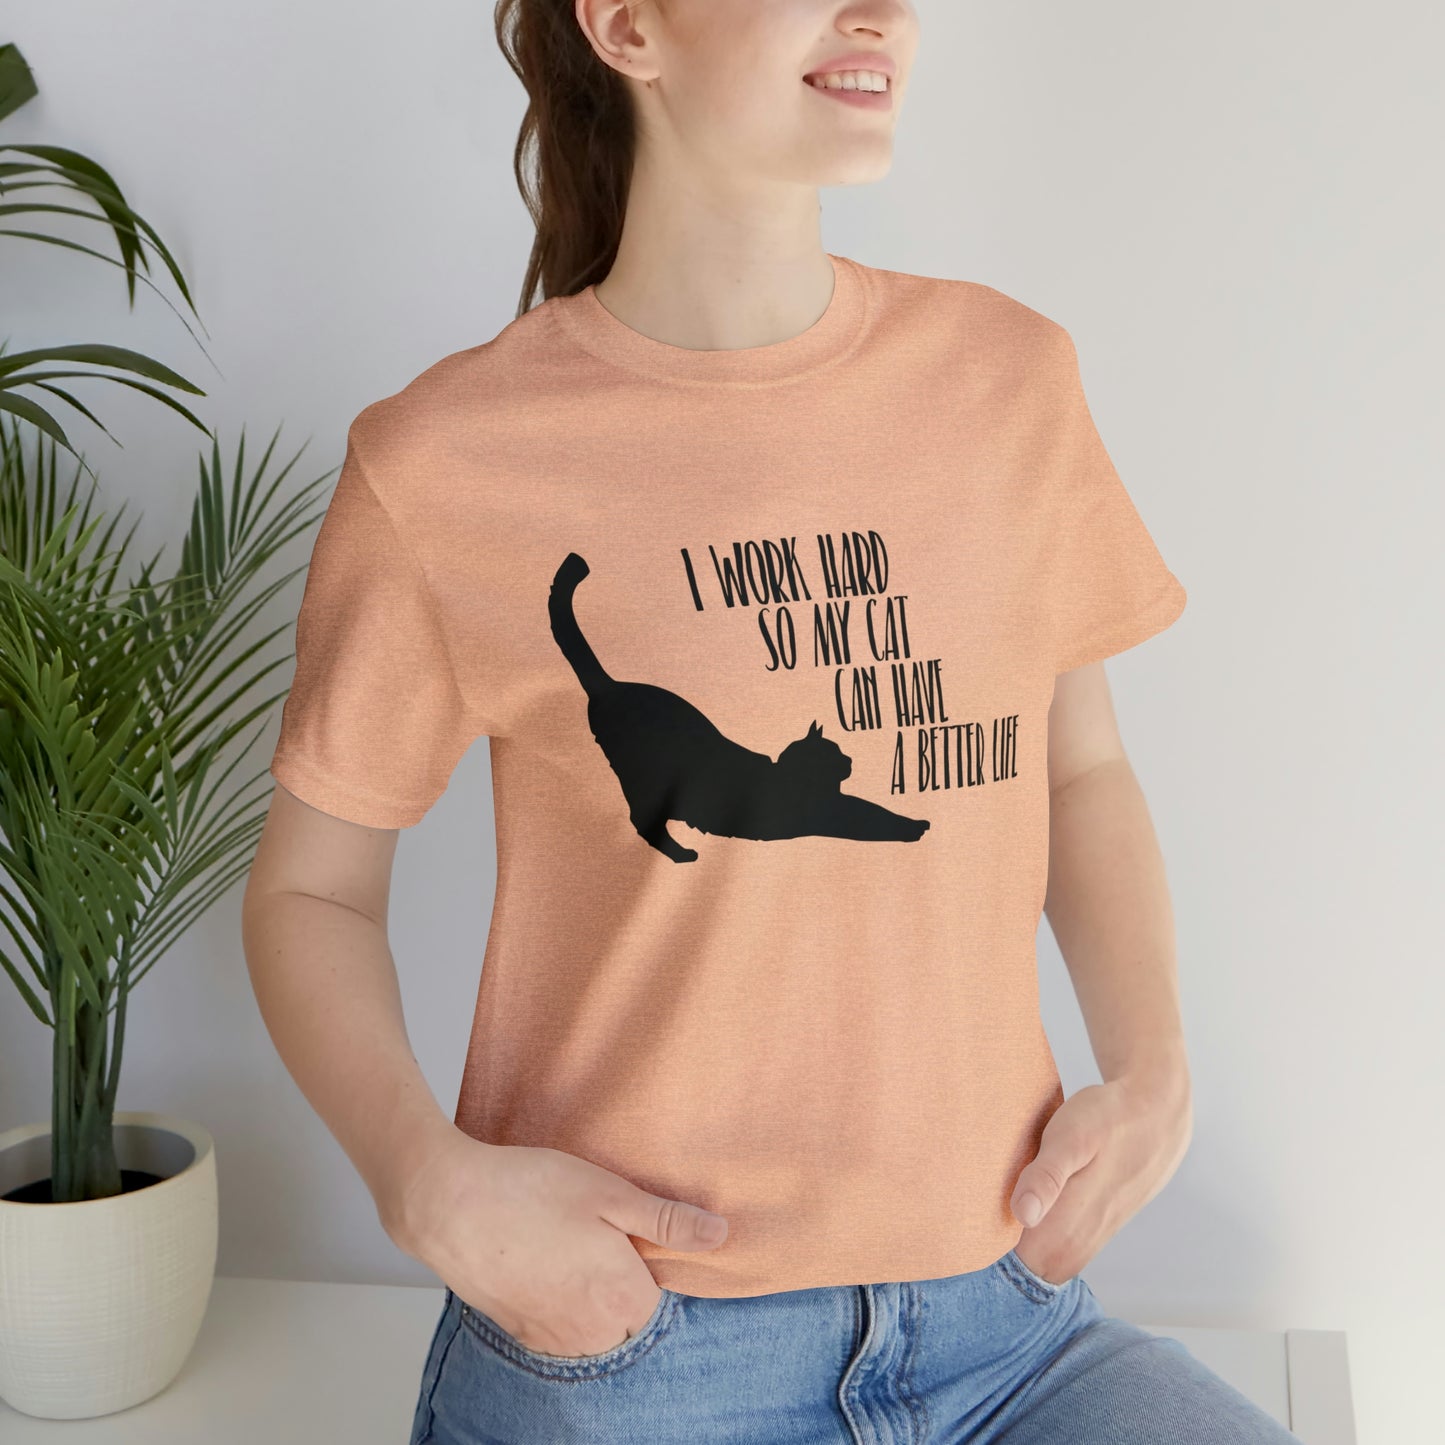 Cat owner quote T-shirt, cute cat shirt, cat quote tee, cat owner top, cat mom top, kawaii cat-themed shirt, Funny cat shirt, cat owner gift